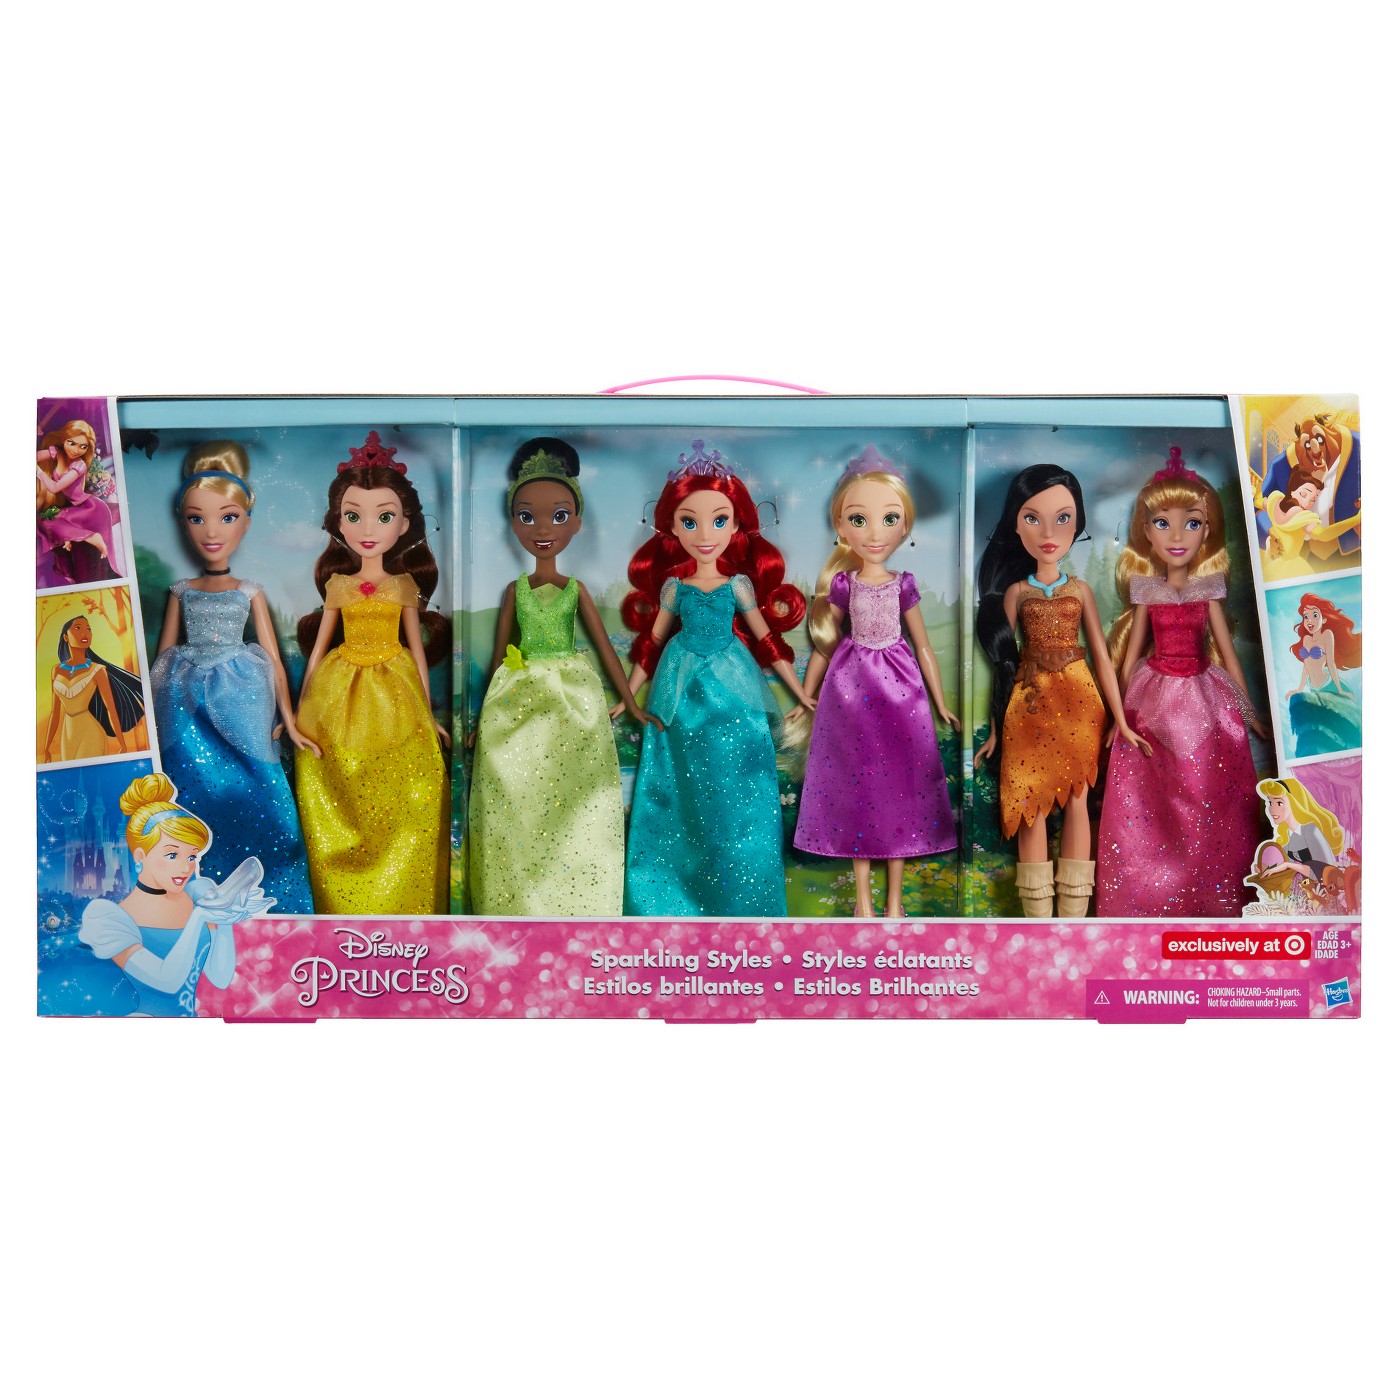 Disney Princess Sparkling Styles Dolls 7pk - image 2 of 11